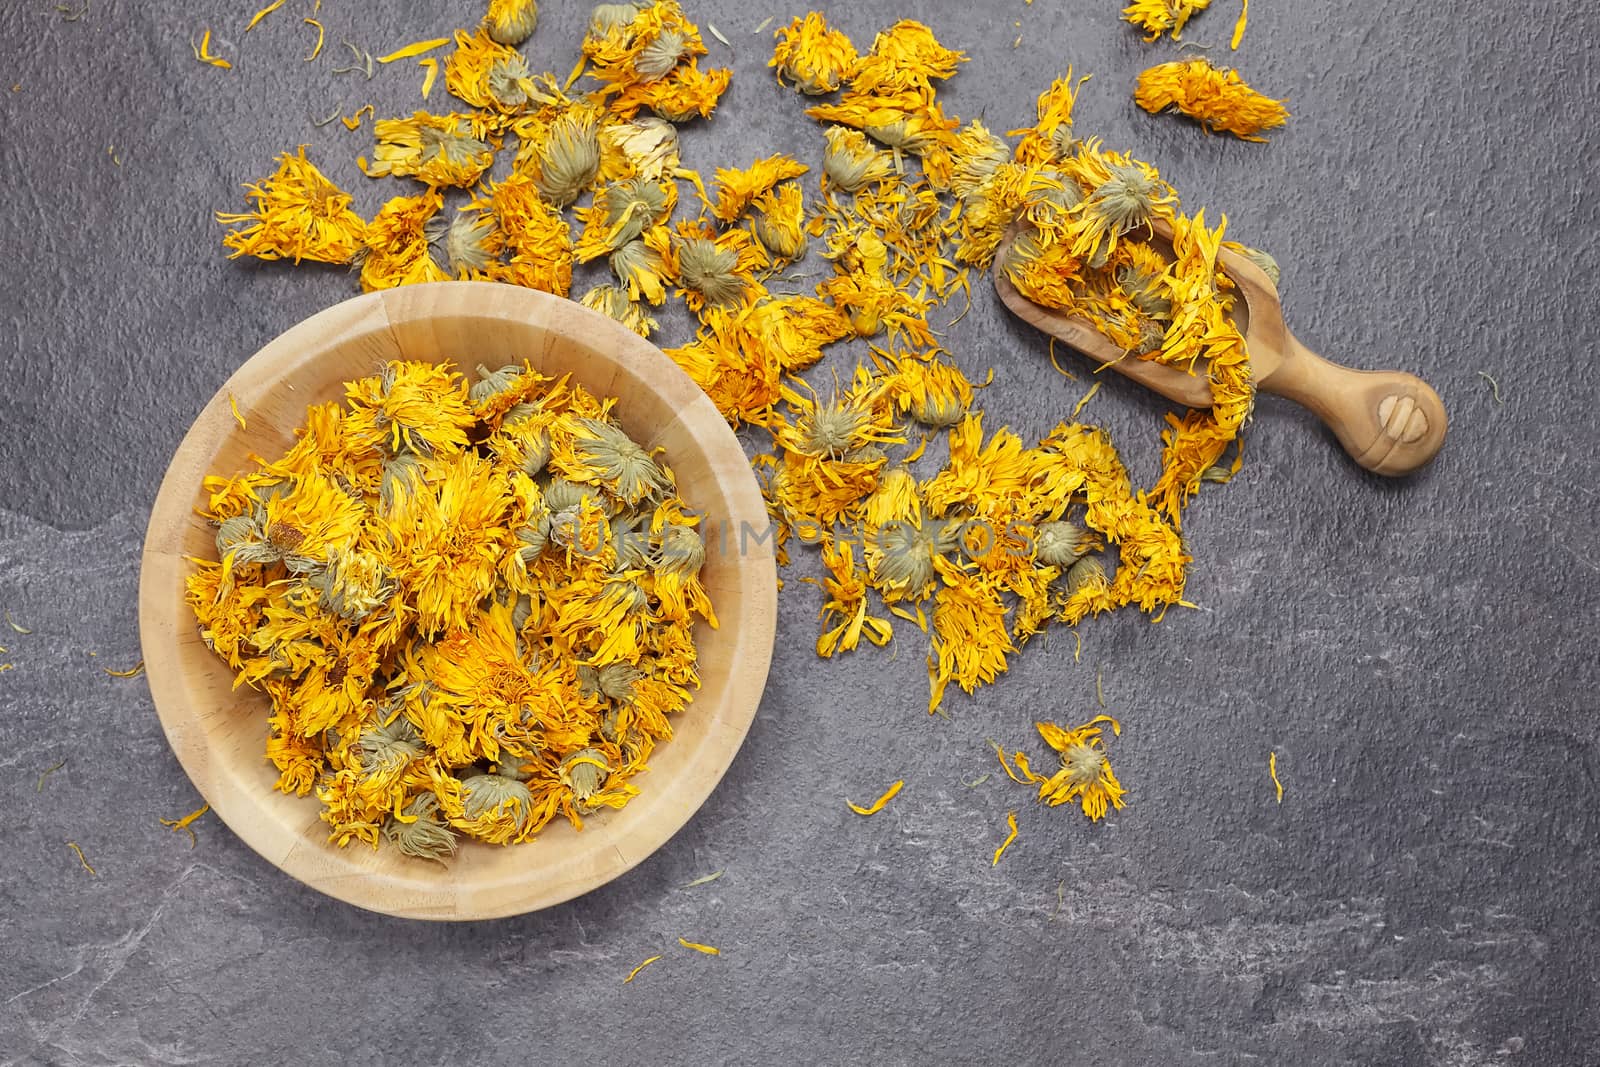 Dried calendula or marigold flowers by Slast20